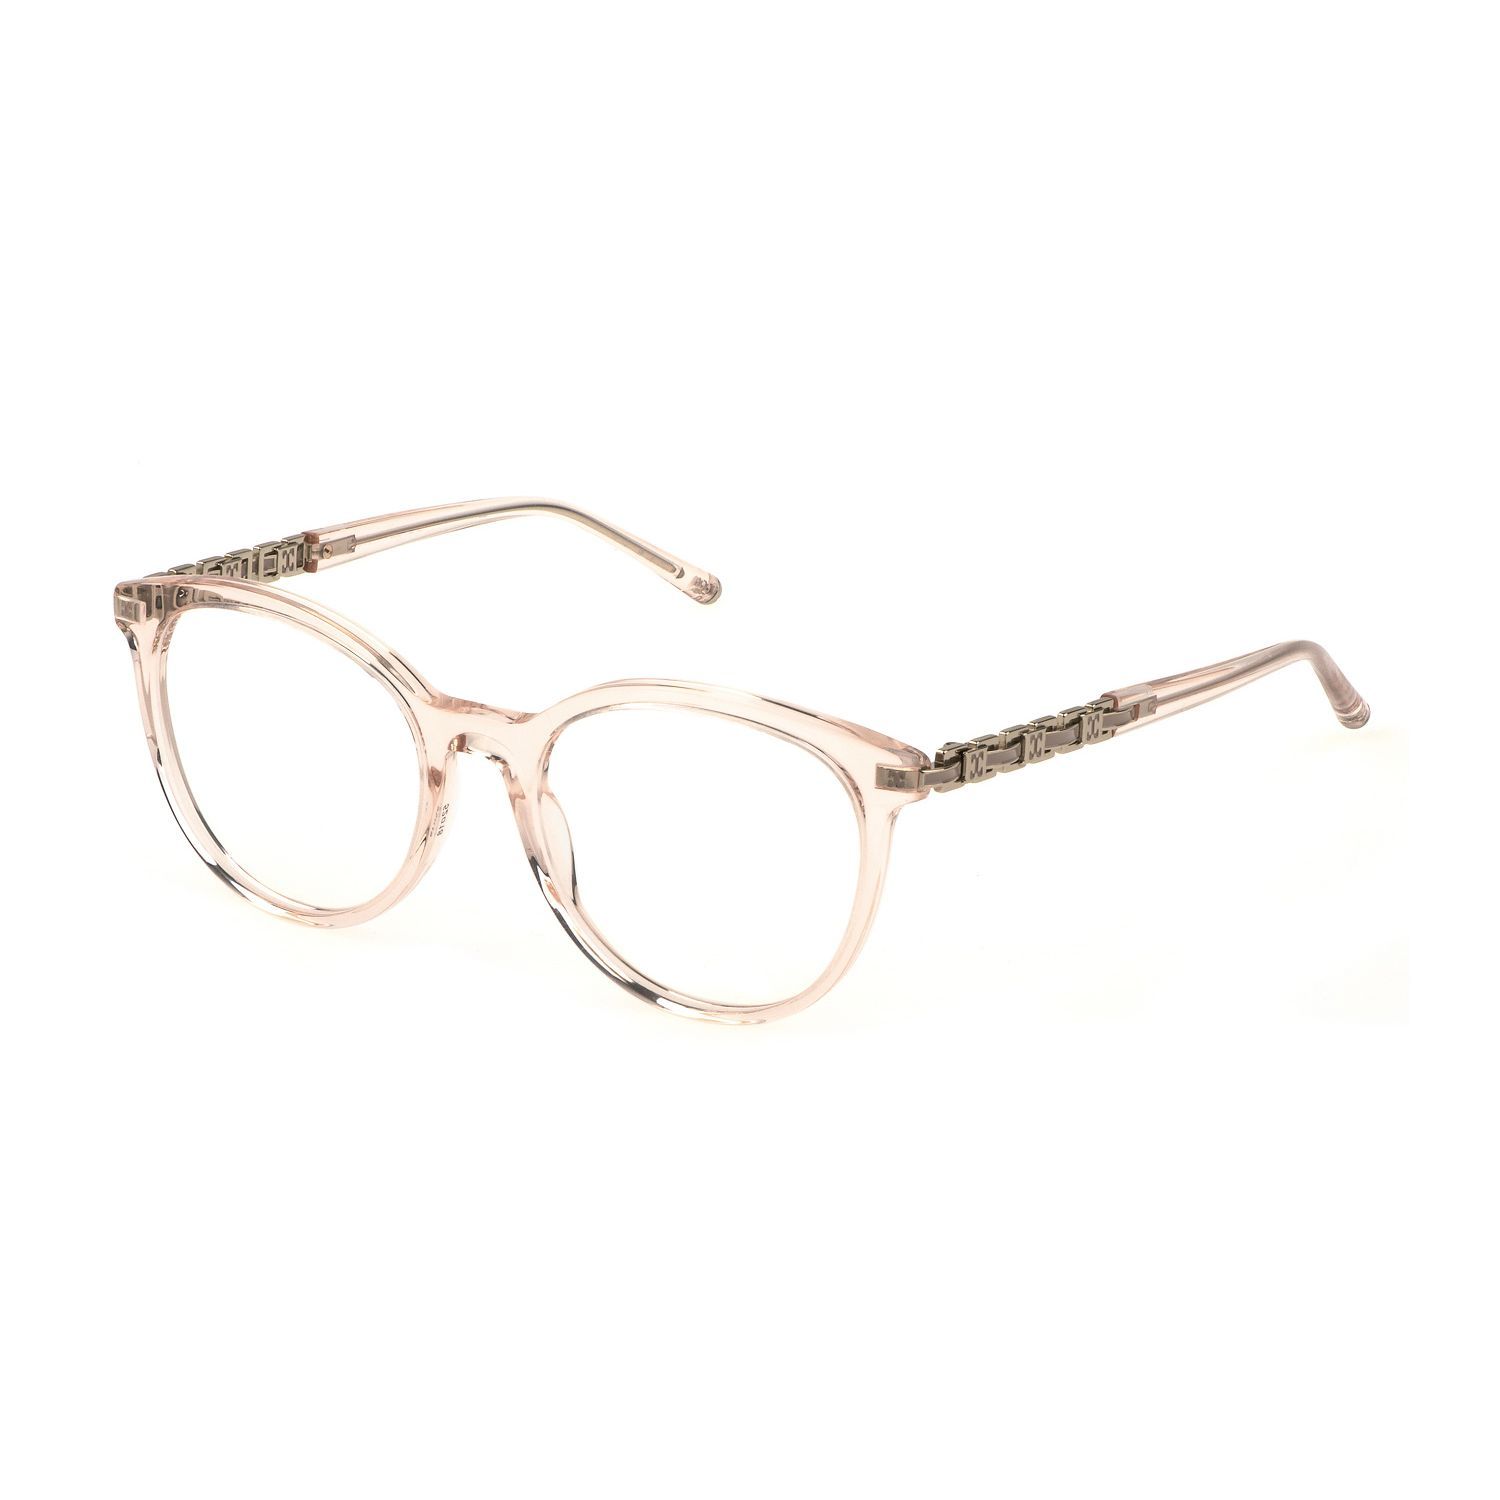 VESE07 Panthos Eyeglasses 09TU - size 52